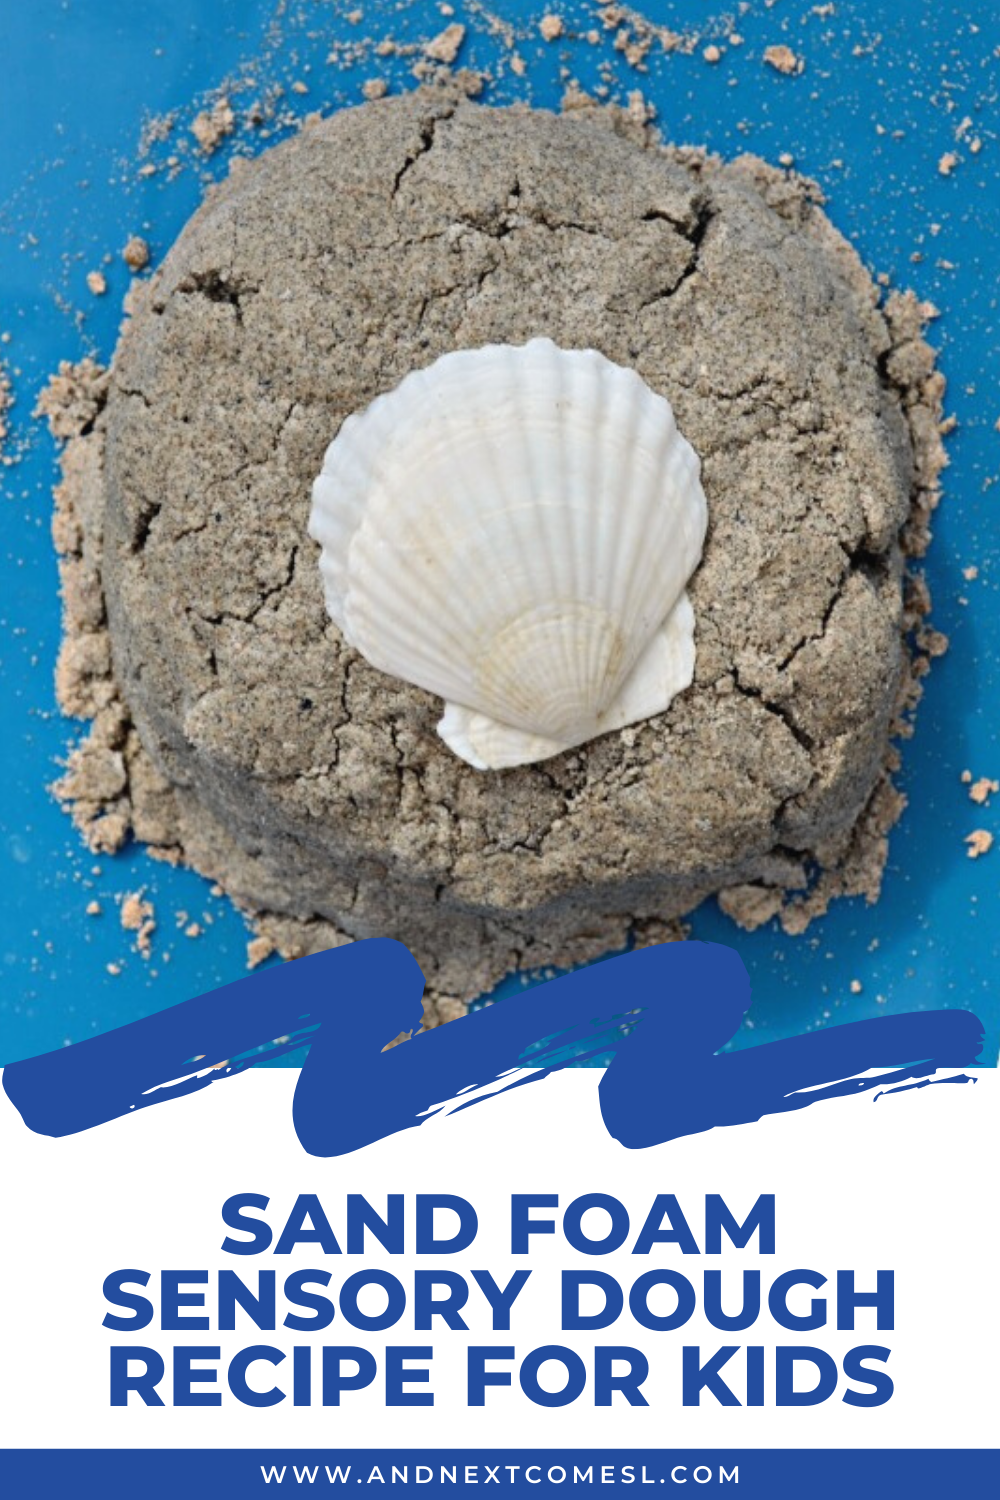 Easy 3 ingredient sand foam sensory dough recipe for kids